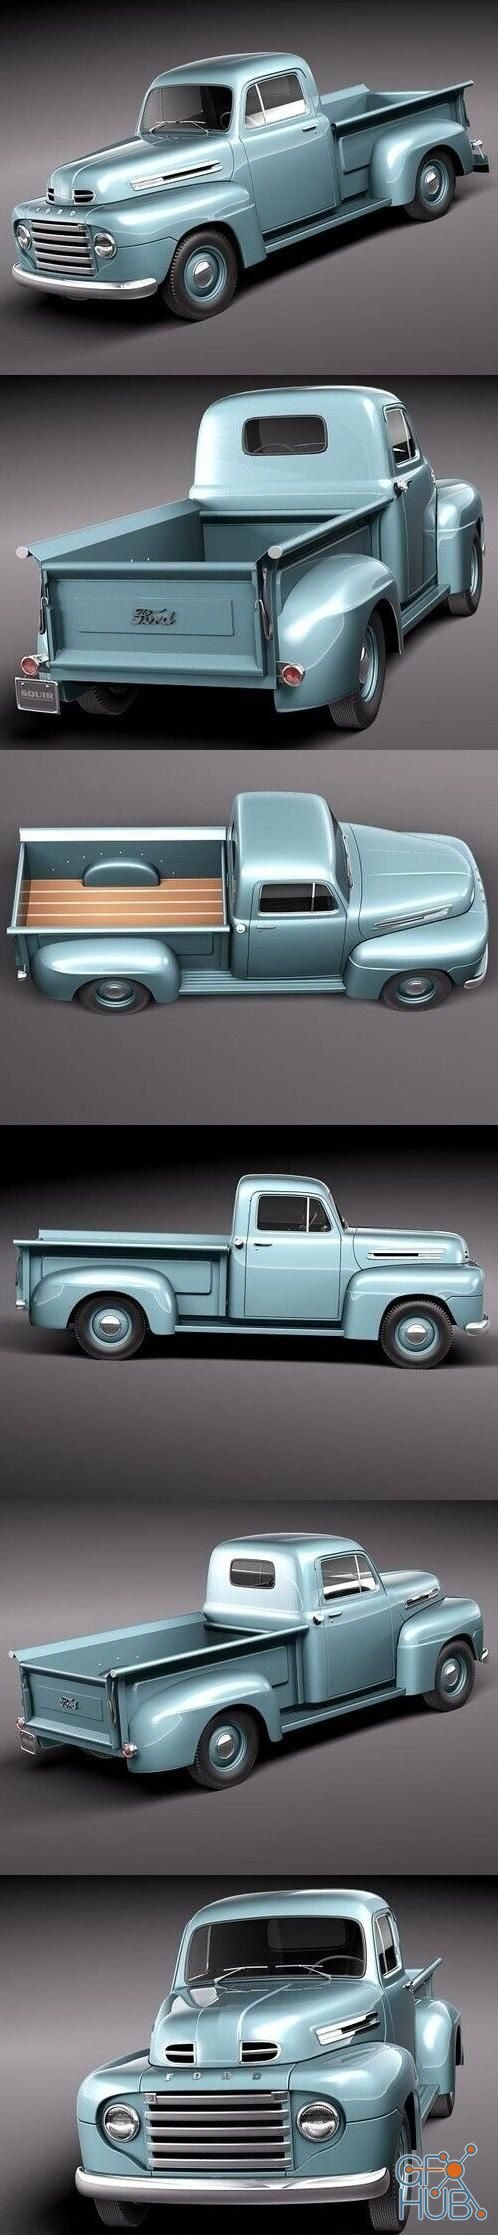 Ford F1 Pickup Truck 1950